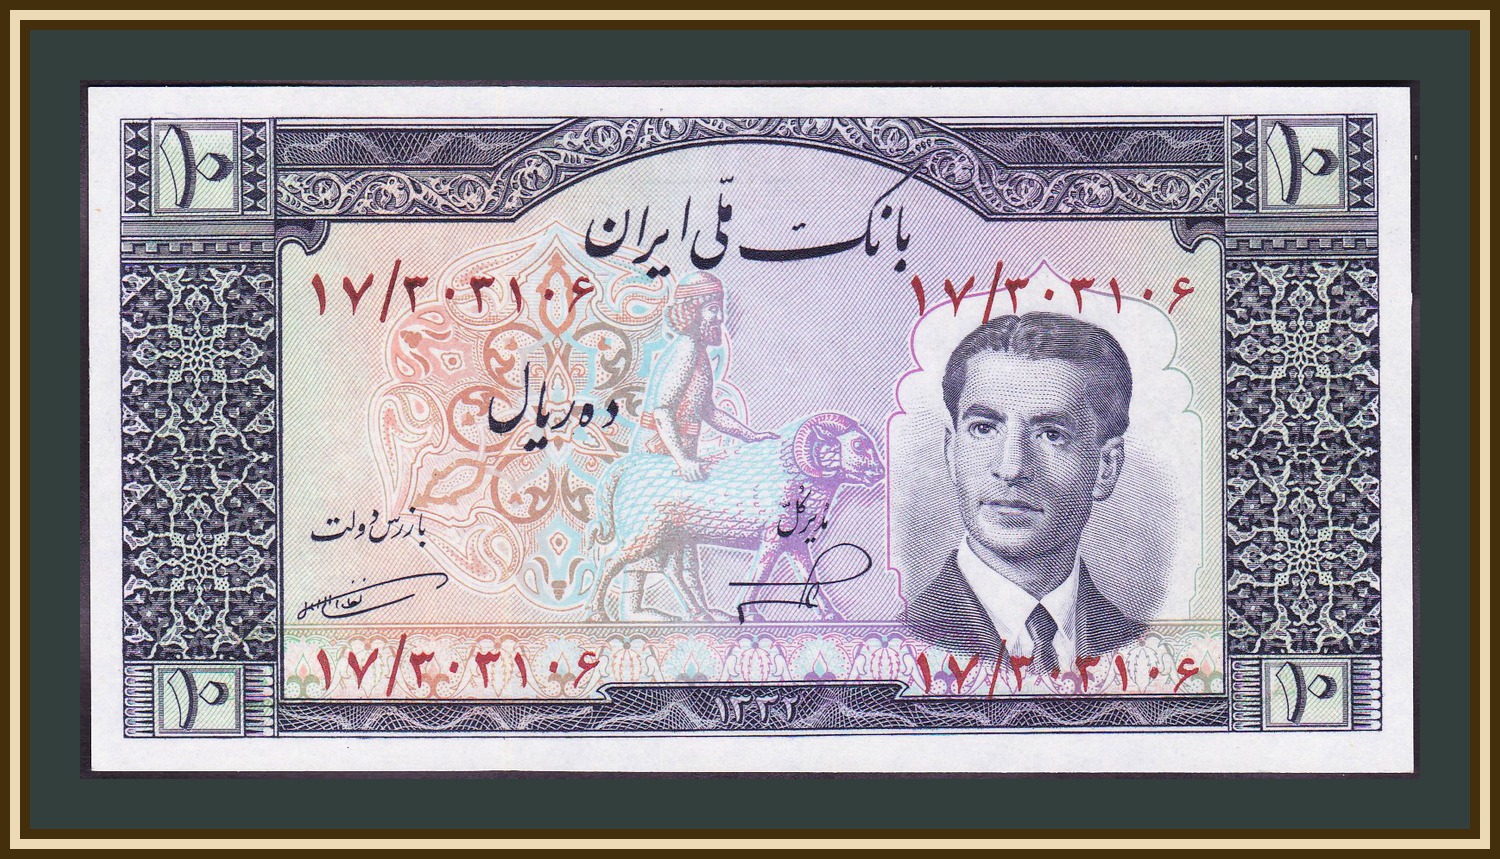 Иранские реалы в рубли. Банкноты Ирана. 10 Риалов Иран банкнота. 10 Реал Иран банкнота. Иранские реалы и томаны.